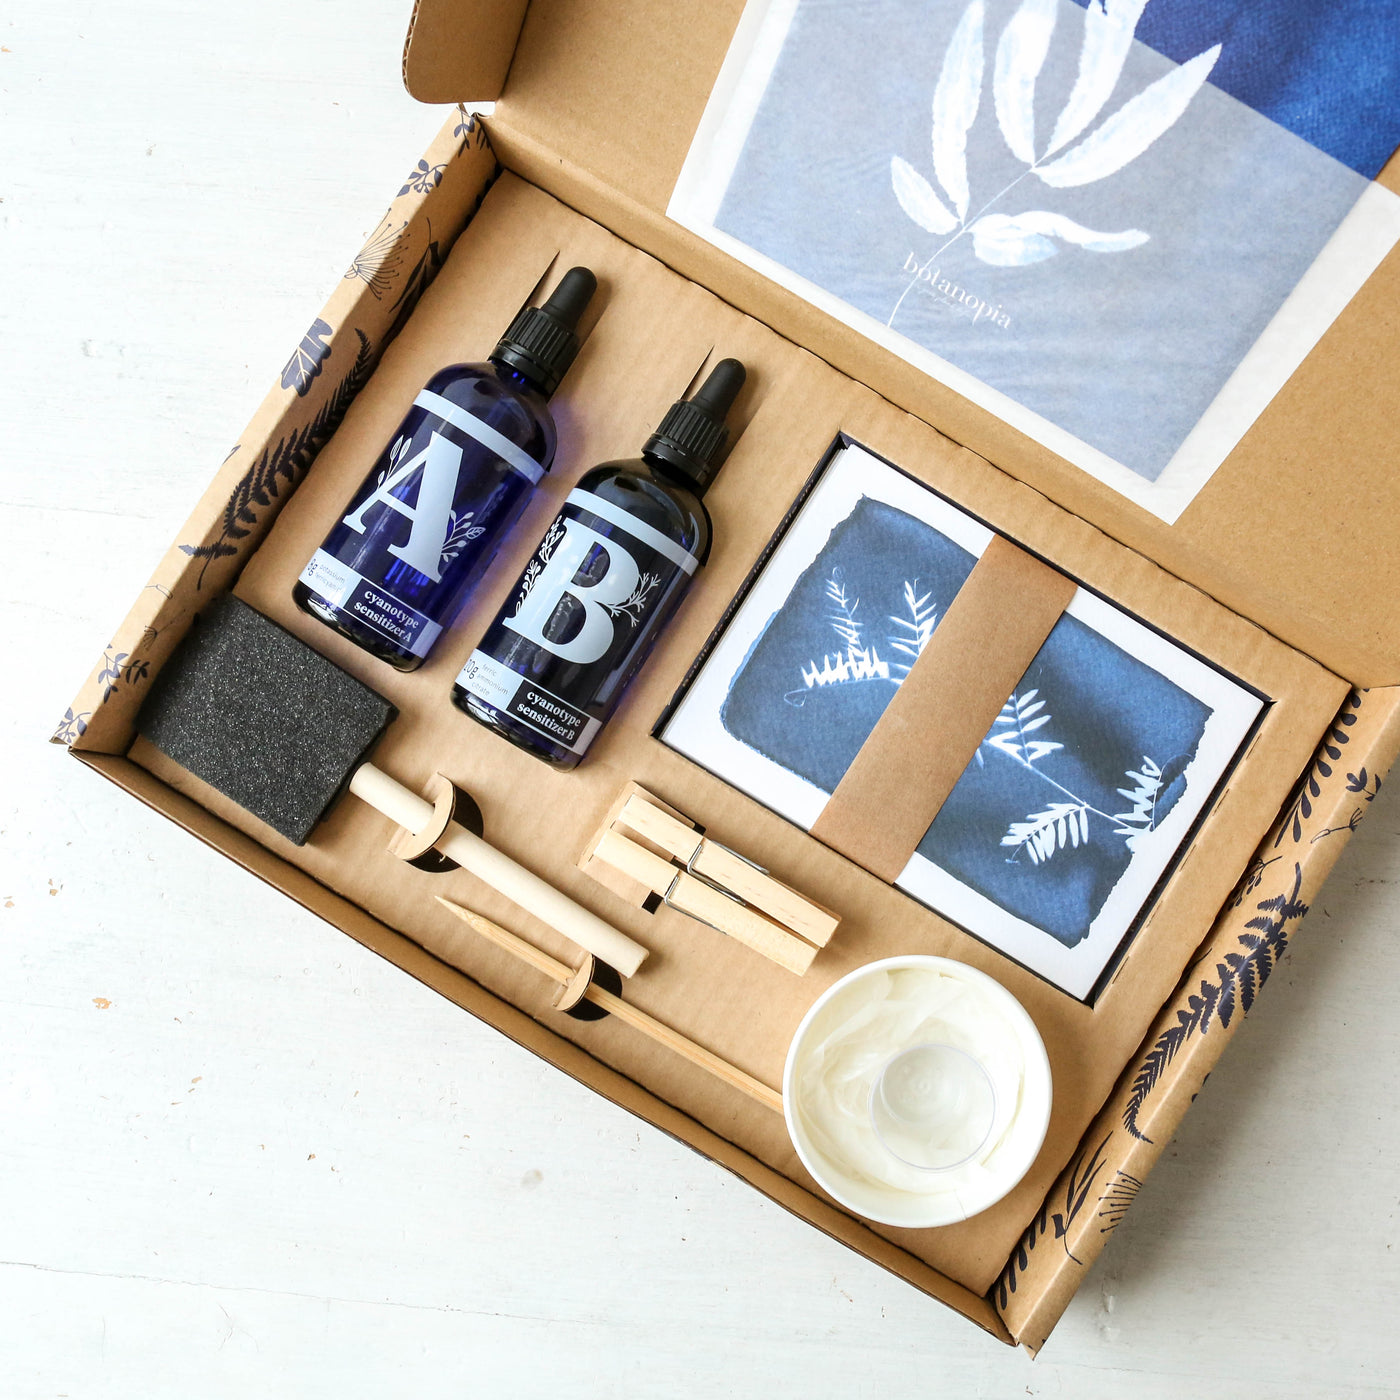 Cyanotype Kit – DIY kit to create your own gorgeous prints